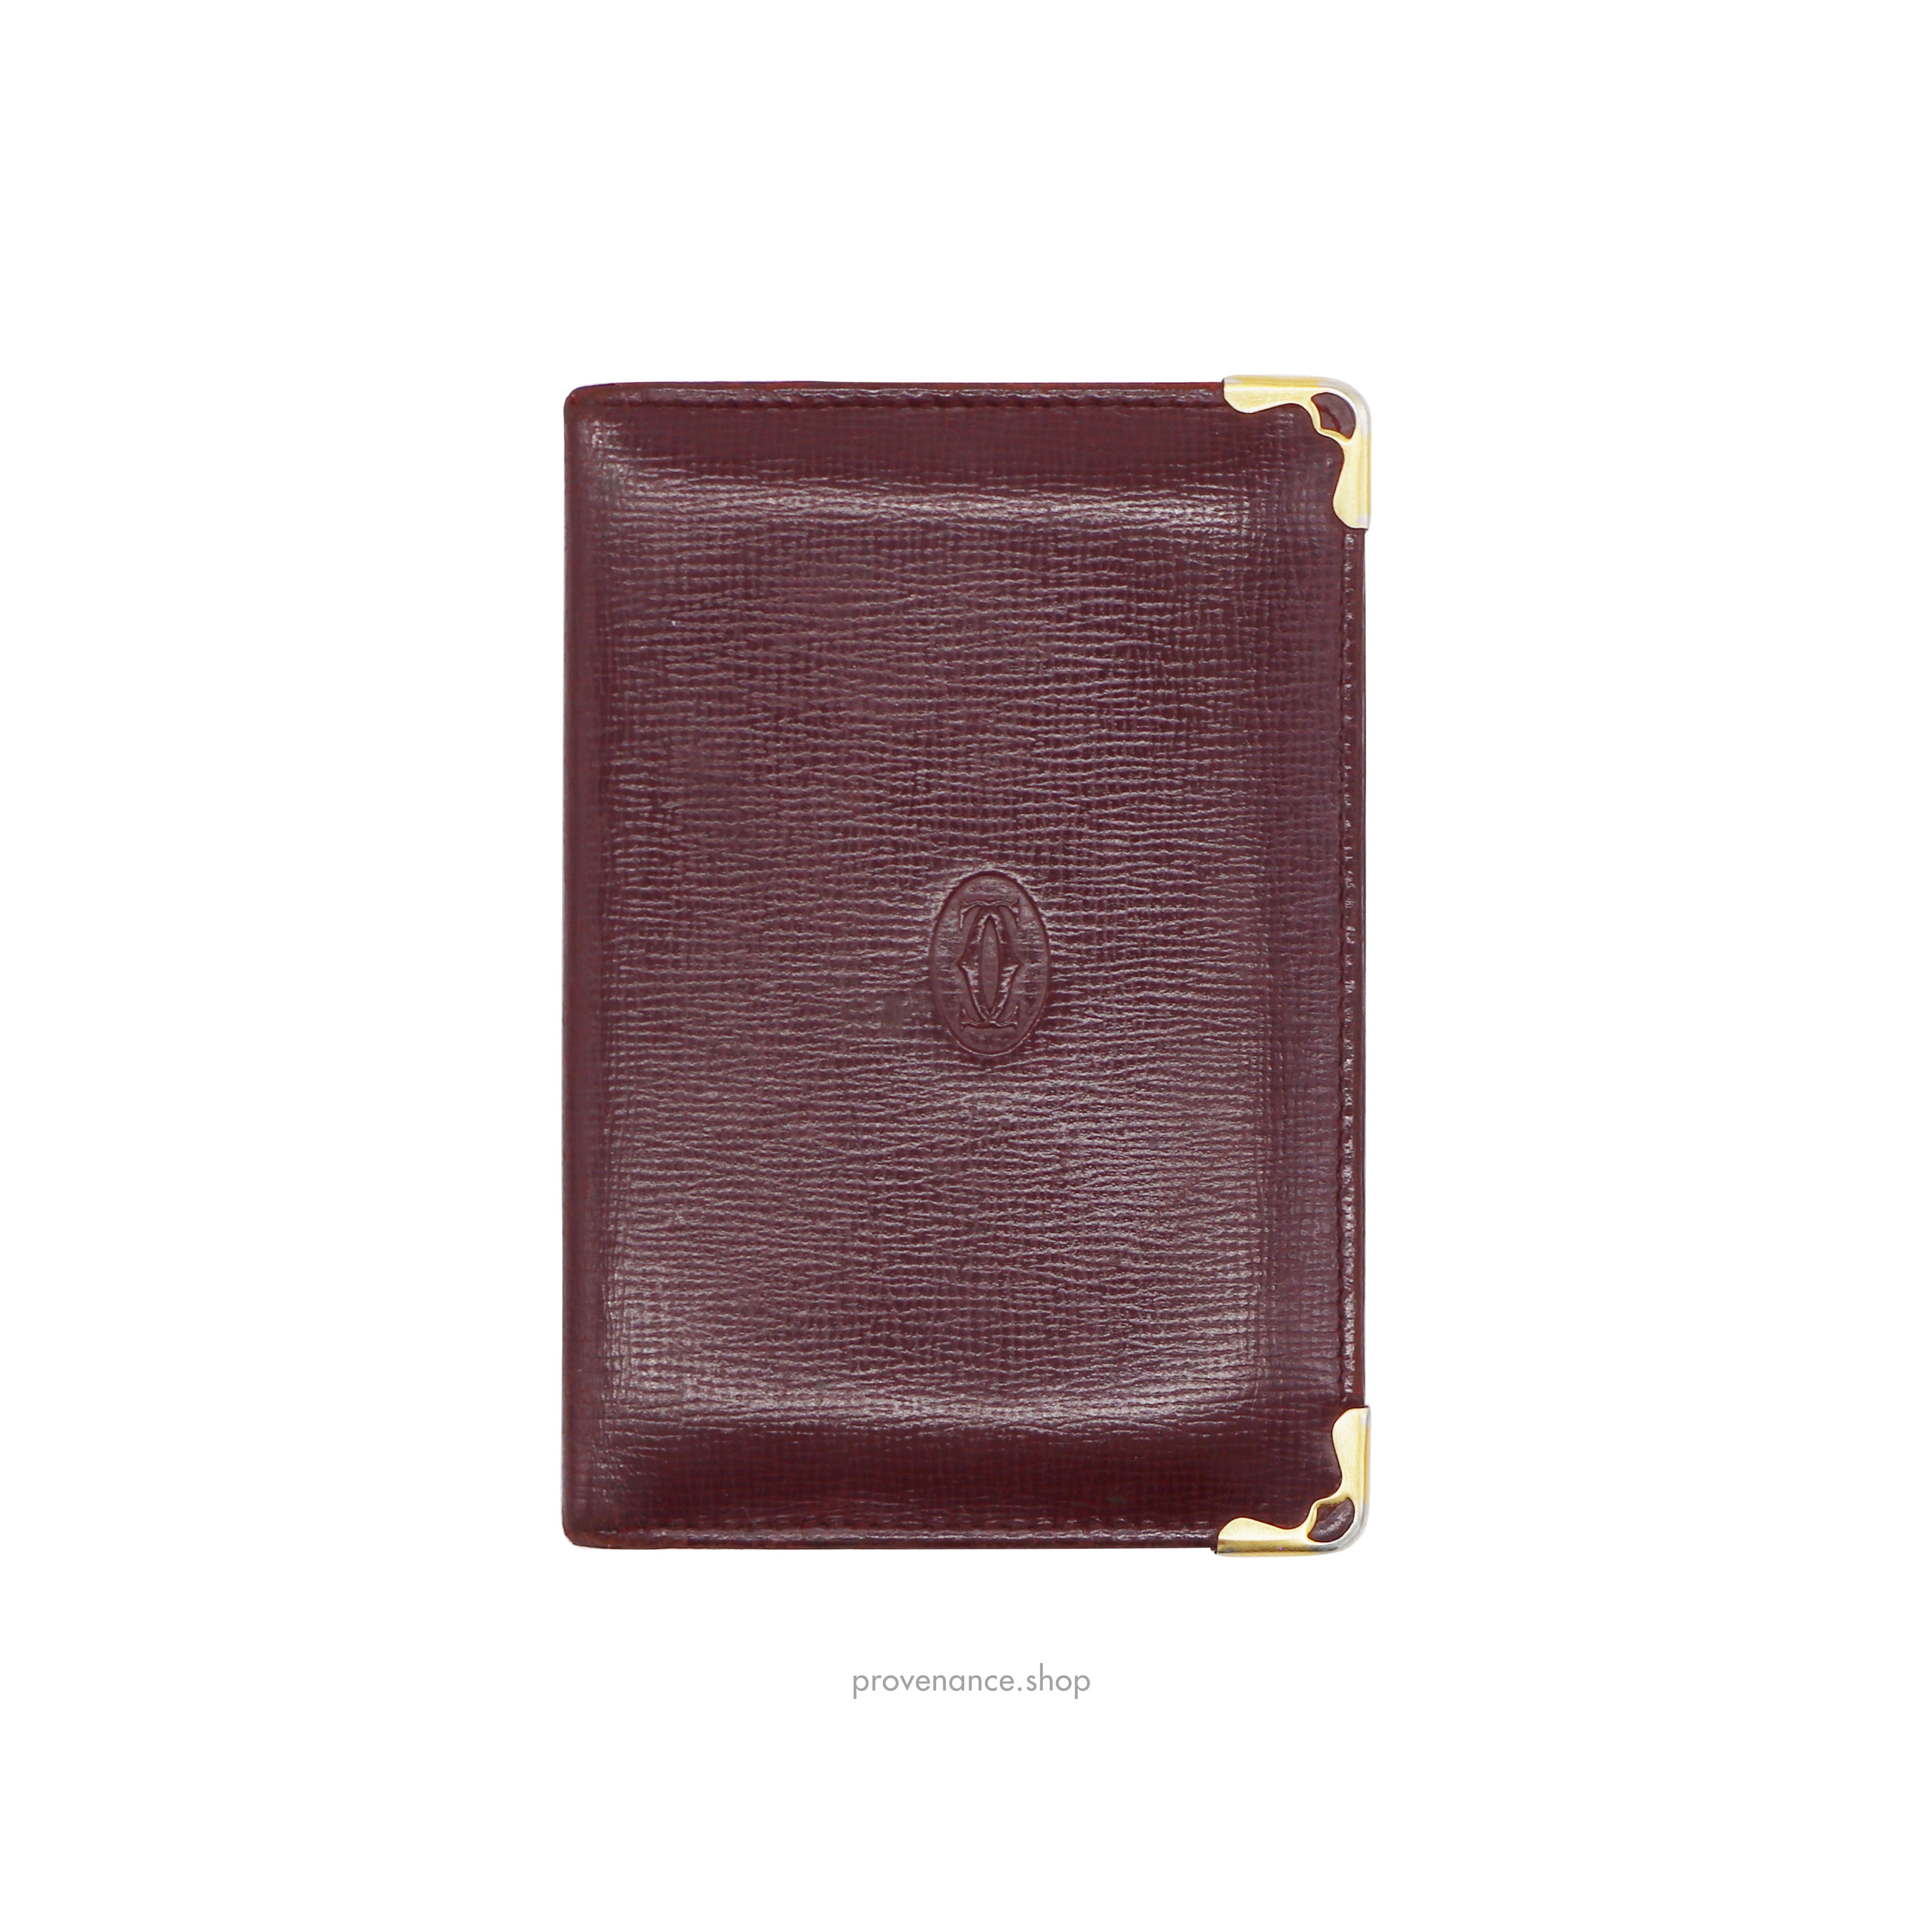 Cartier Pocket Organizer Wallet - Burgundy Leather - 1